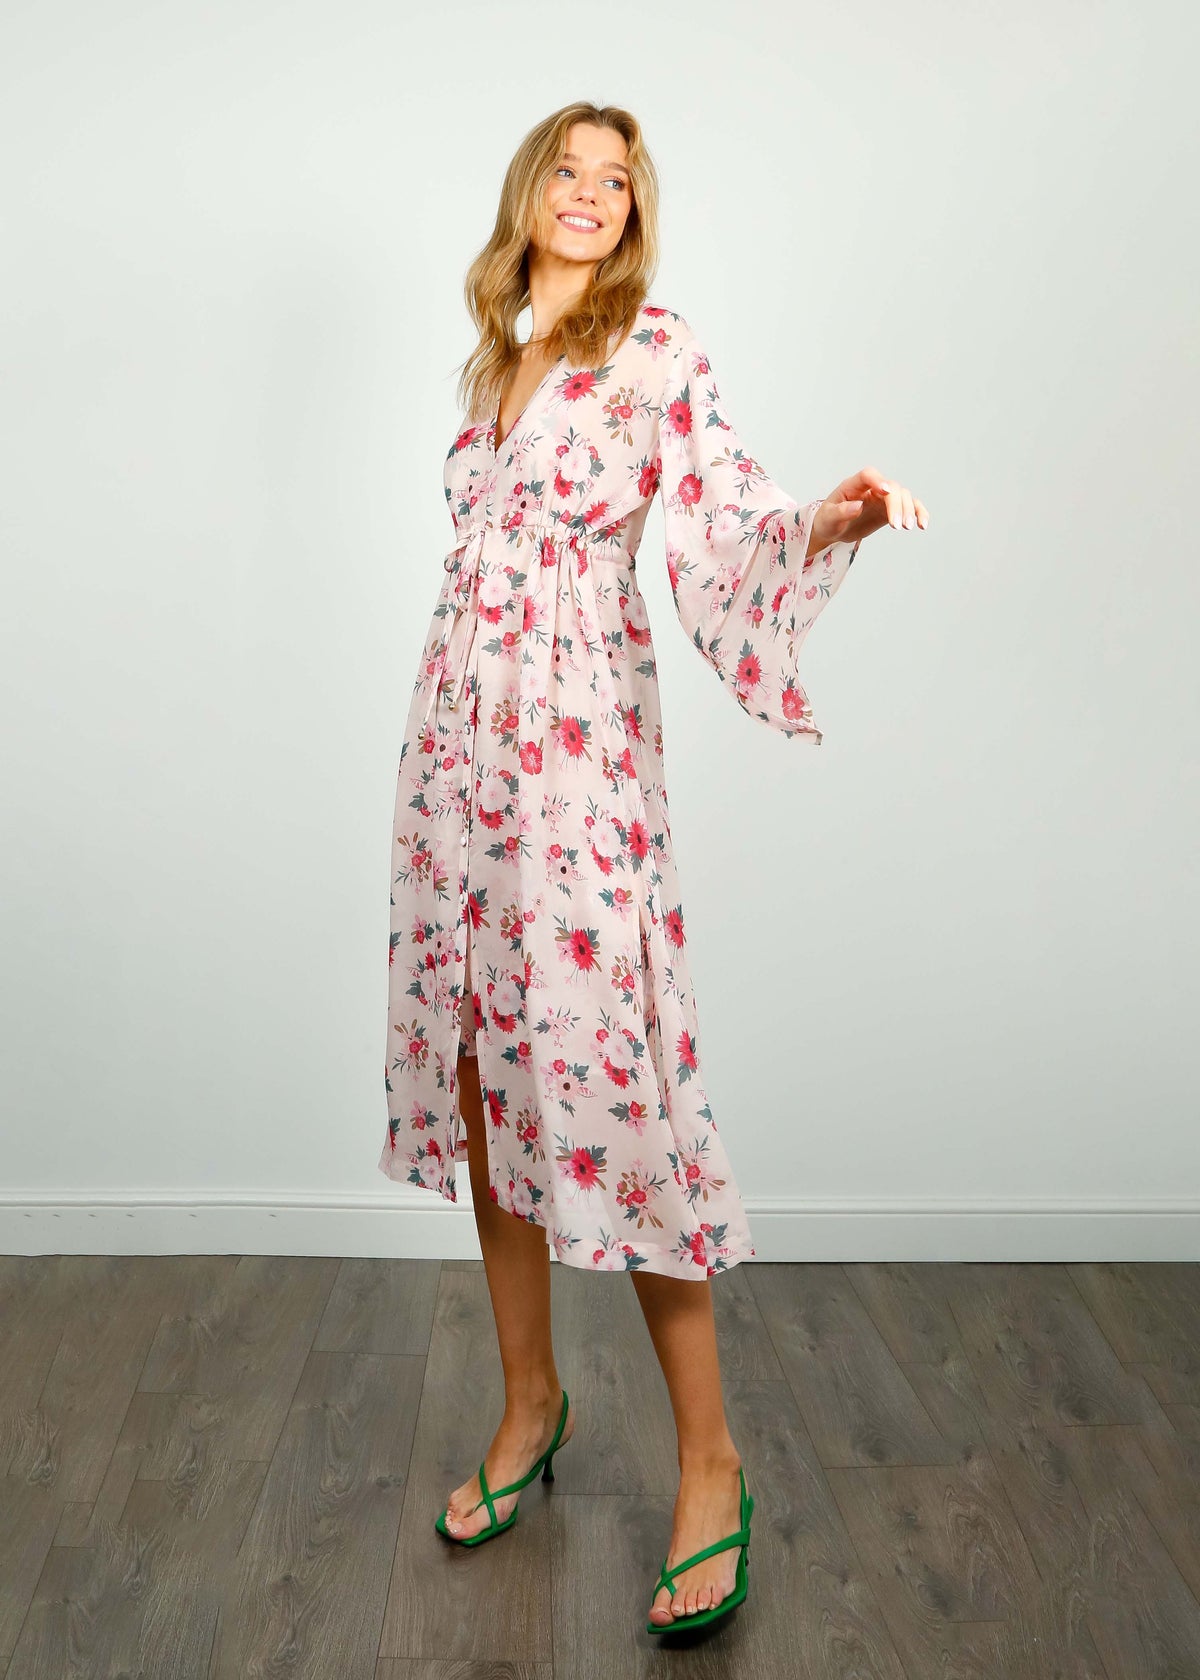 PPL Emma Dress with Slip in Blooms 04 Beige